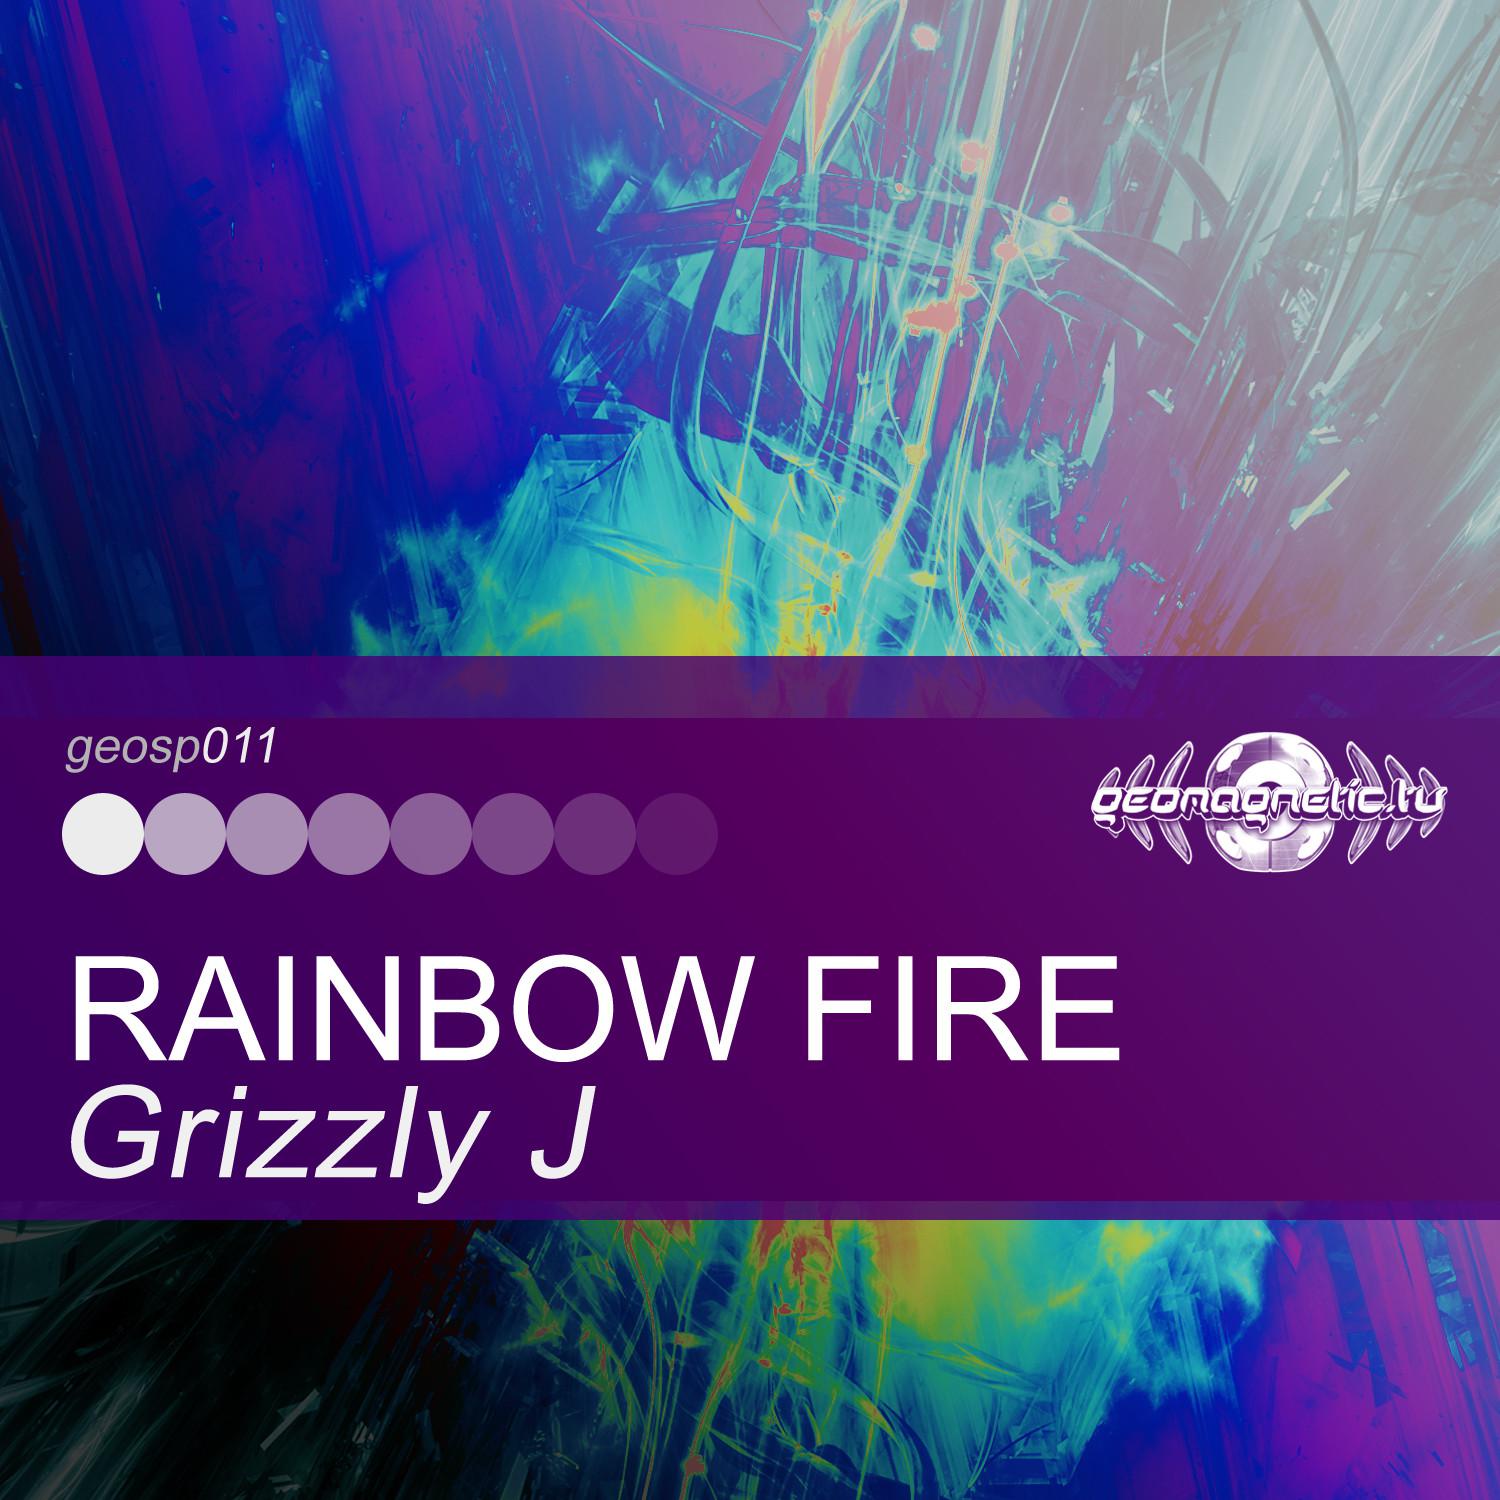 Grizzly - J - Rainbow Fire